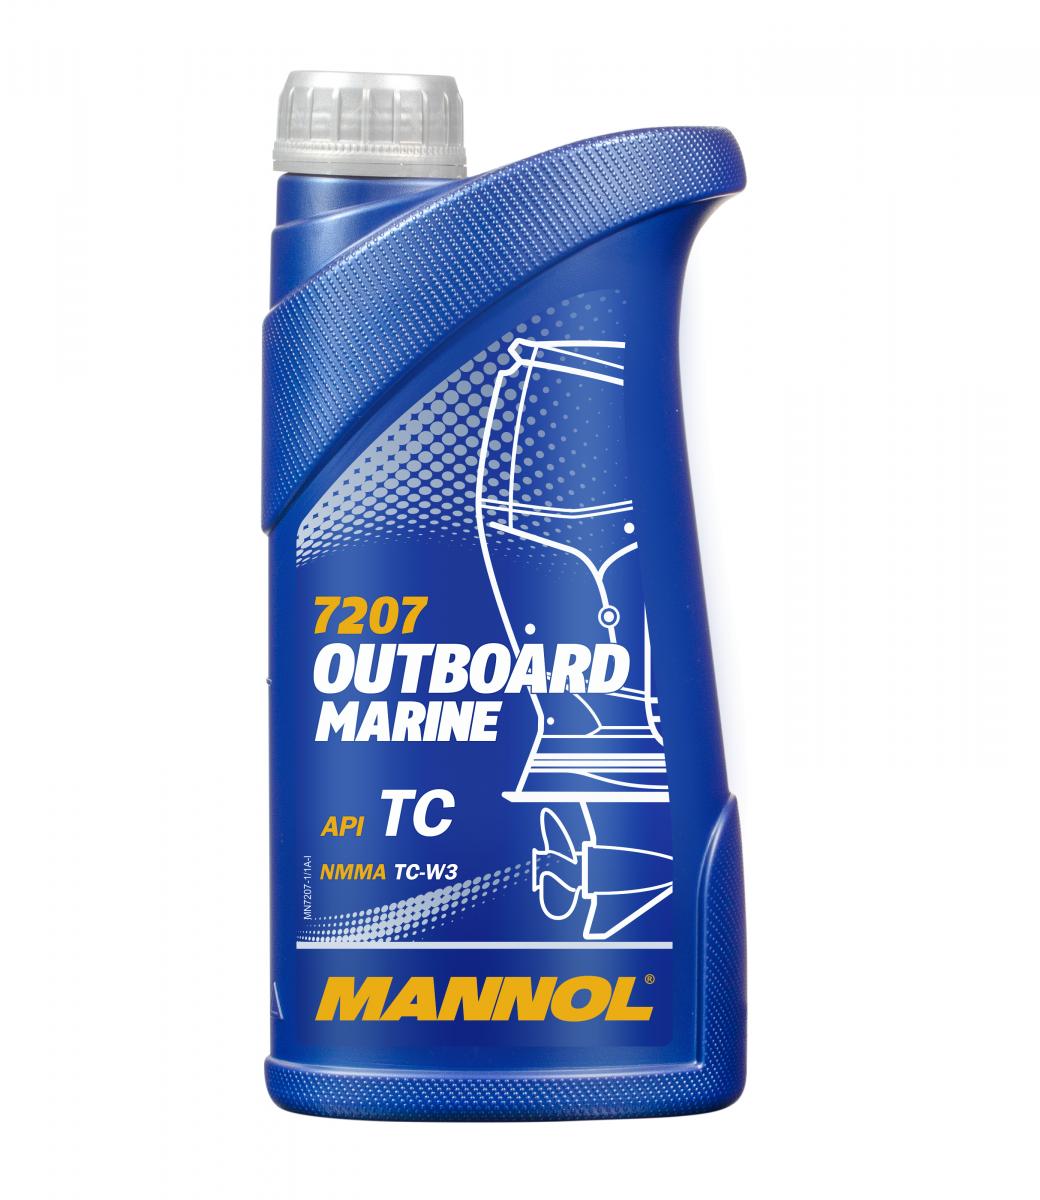 10 Liter (10x1) MANNOL Outboard Marine API TC Motoröl Außenbordmotoröl